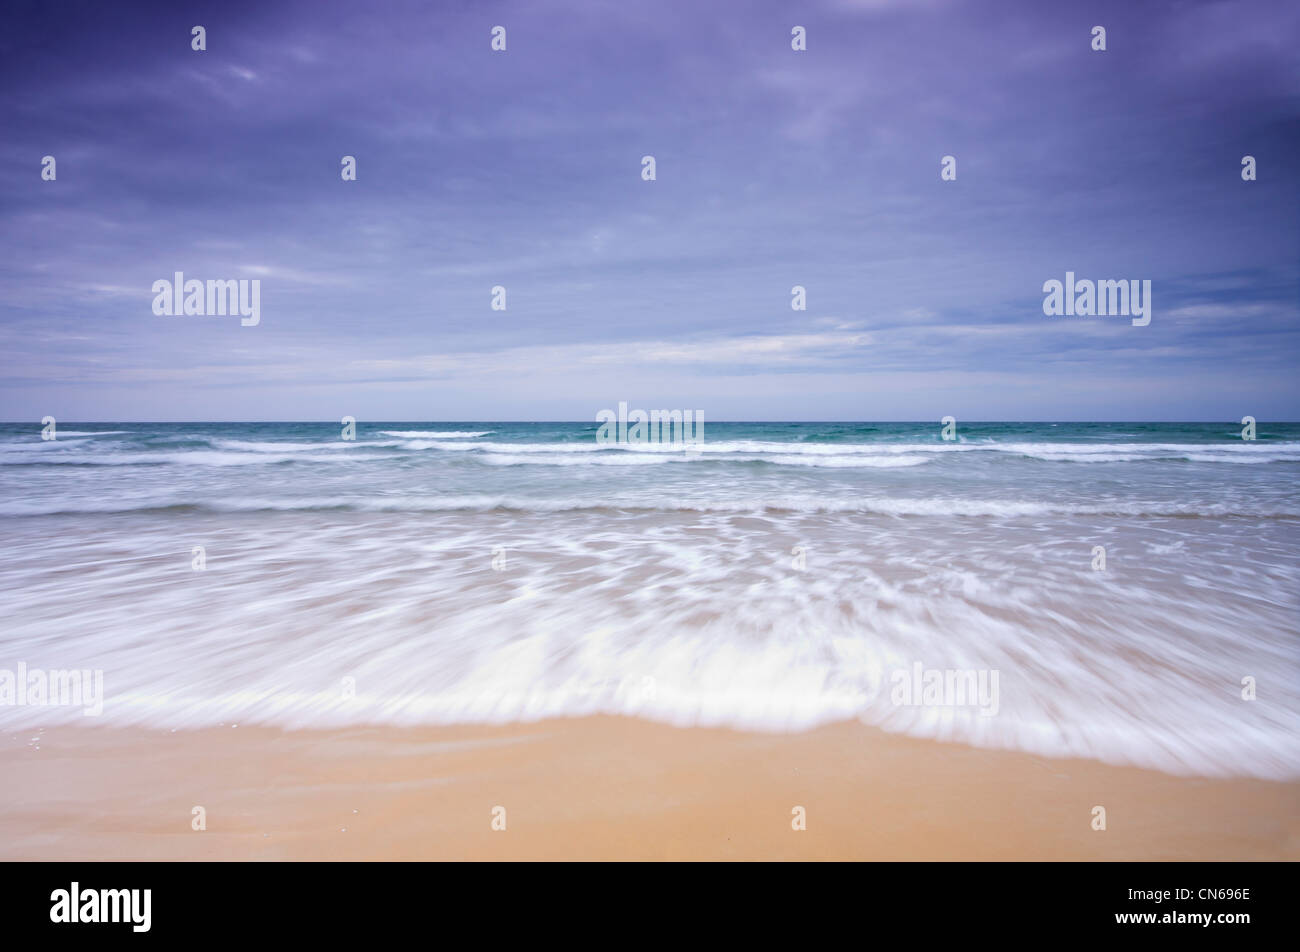 Wave with motion blur breaking on sand beach under dark sky Stock Photo